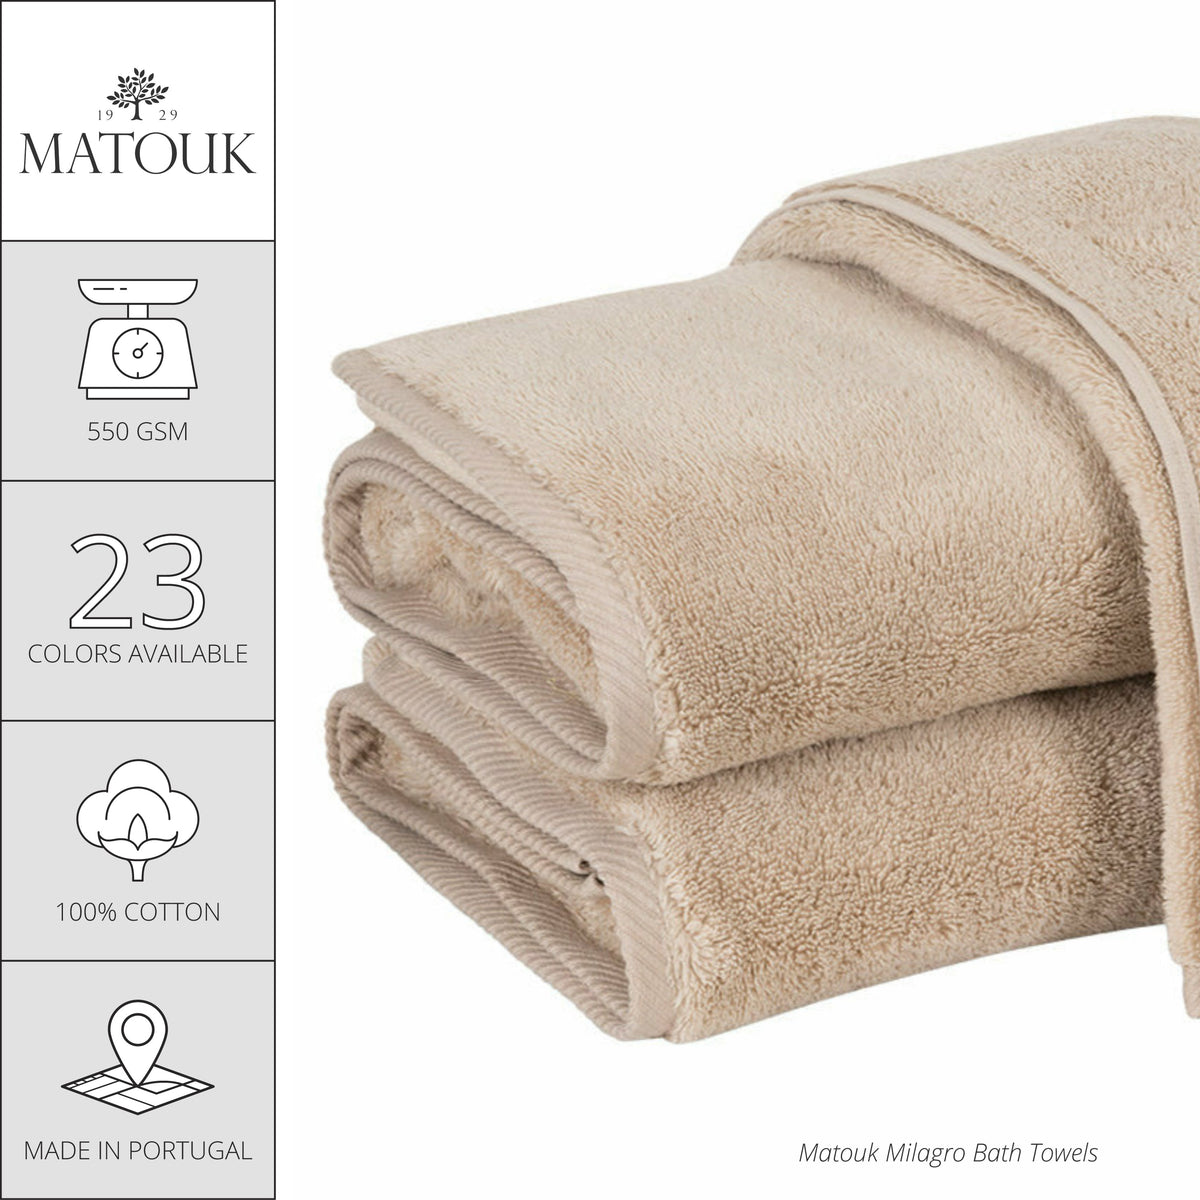 Matouk Milagro Bath Towels and Mats - Peacock